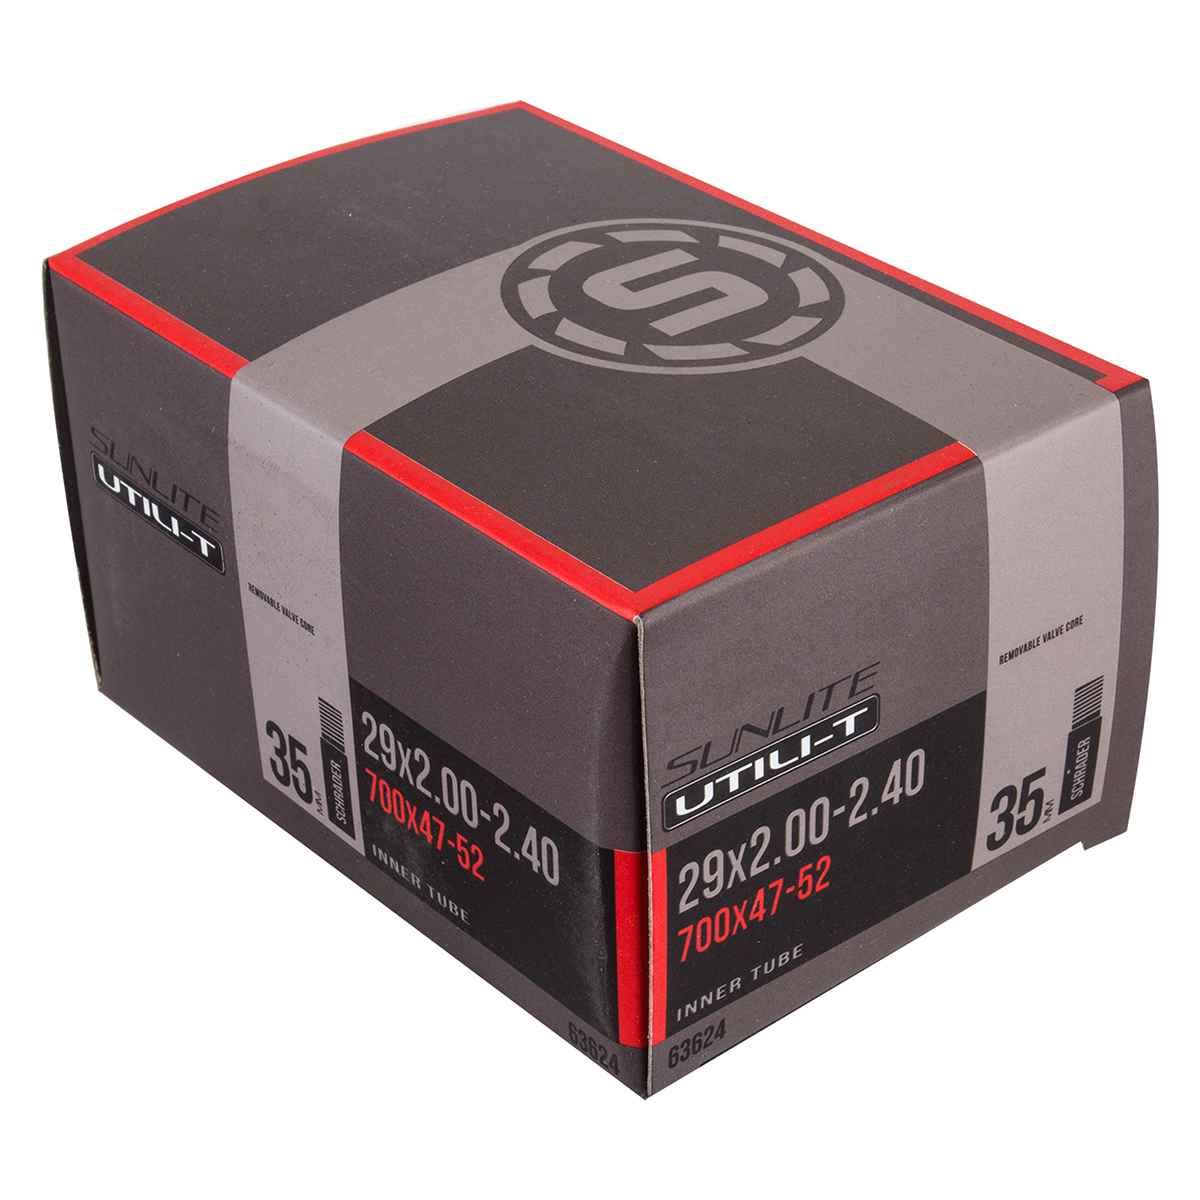 Sunlite Utili-T Standard Schrader Valve Tubes - 29" x 2.00-2.40, 35mm, Black